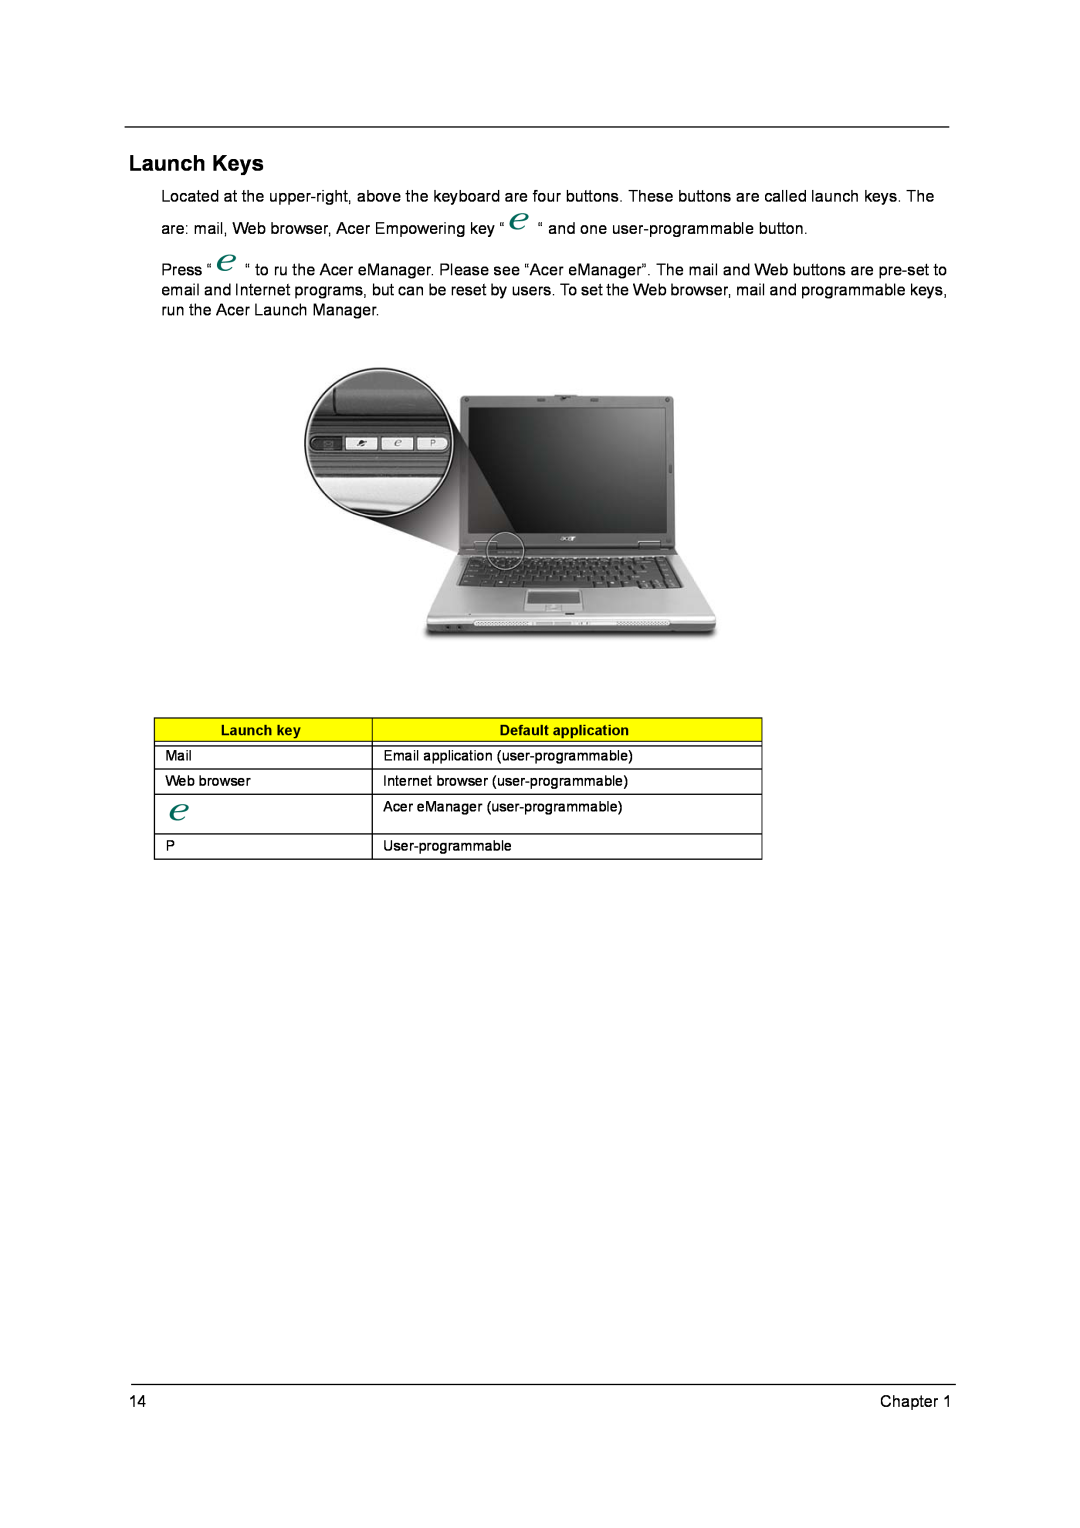 Acer 3220, 3230, 2400, 3210 manual Launch Keys, Launch key, Default application 